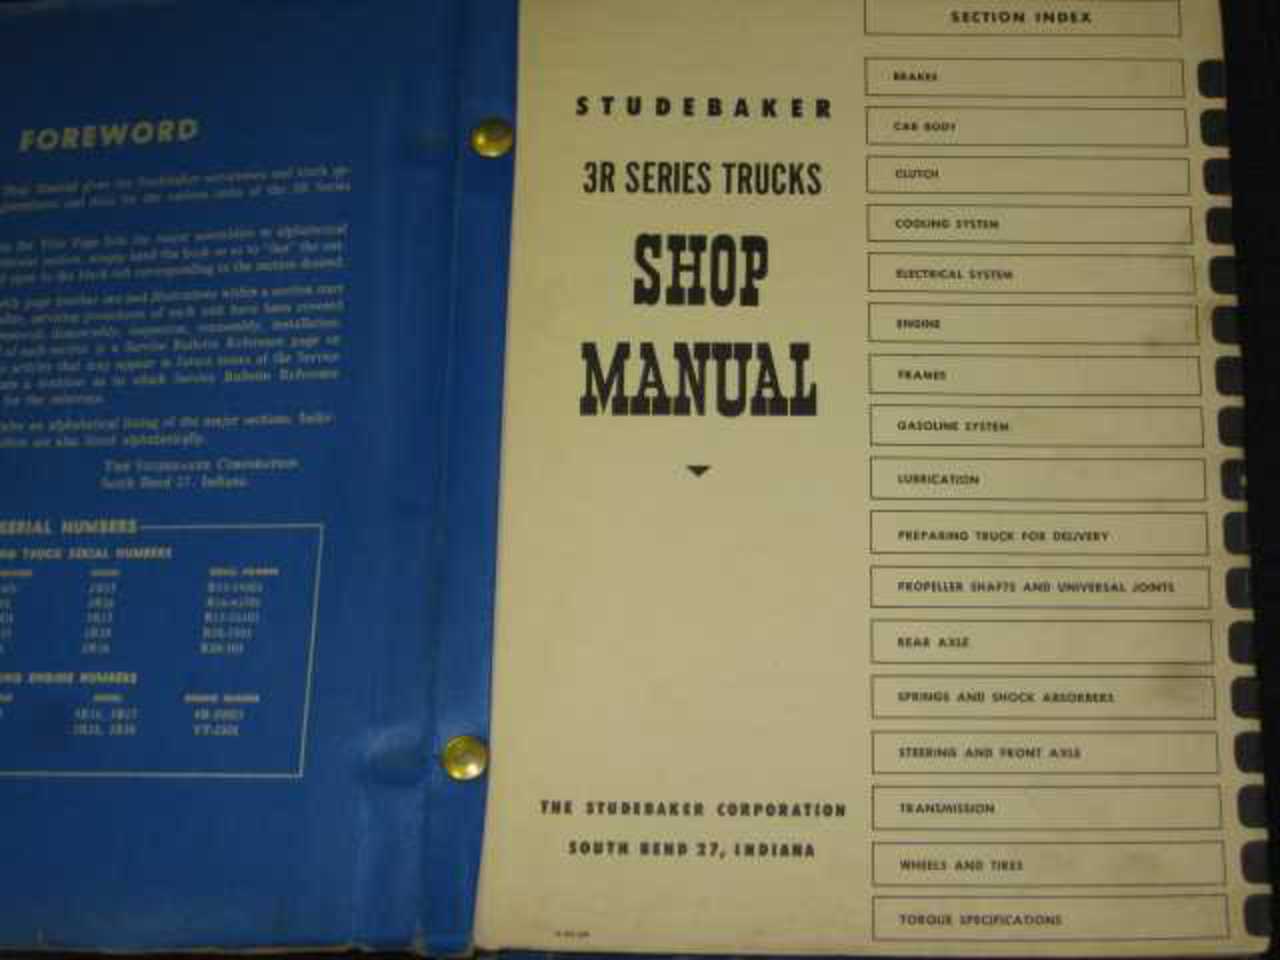 1954 Studebaker 3R Series Truck Shop Manual | eBay